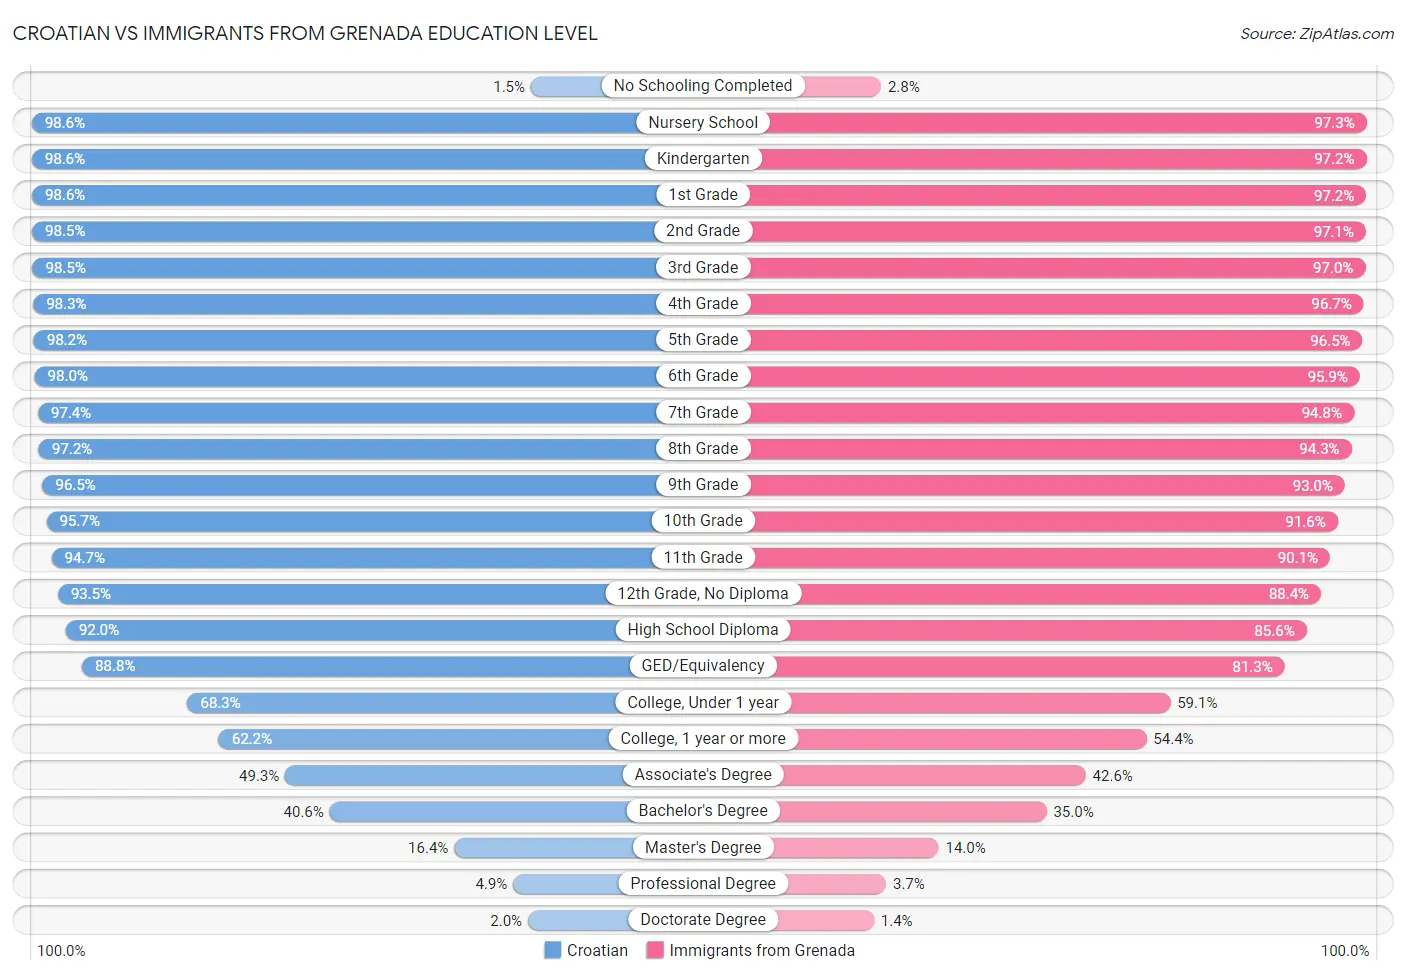 Croatian vs Immigrants from Grenada Education Level